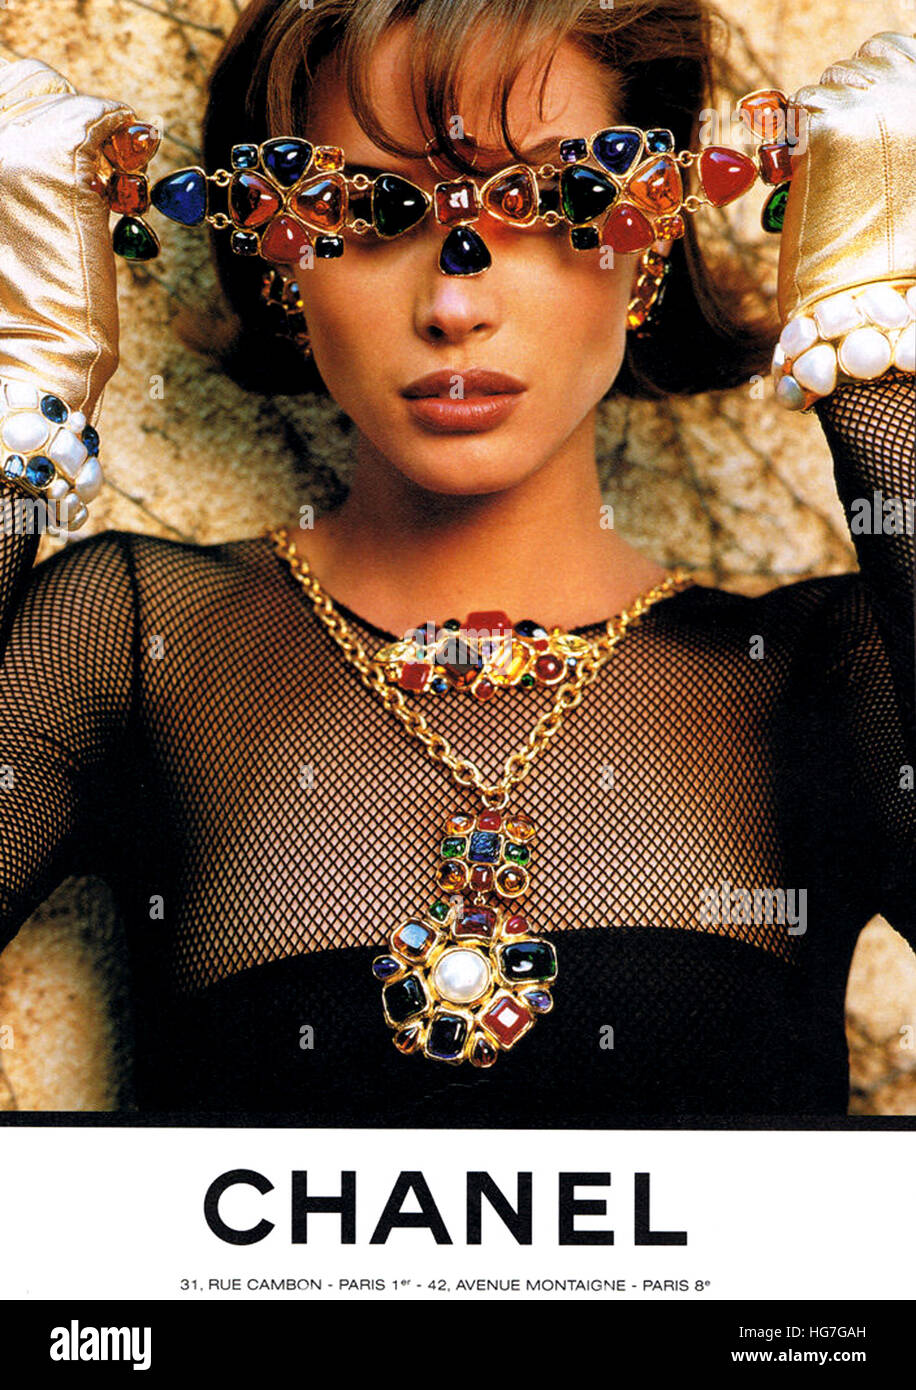 1990s UK Chanel Magazine Advert Stock Photo - Alamy